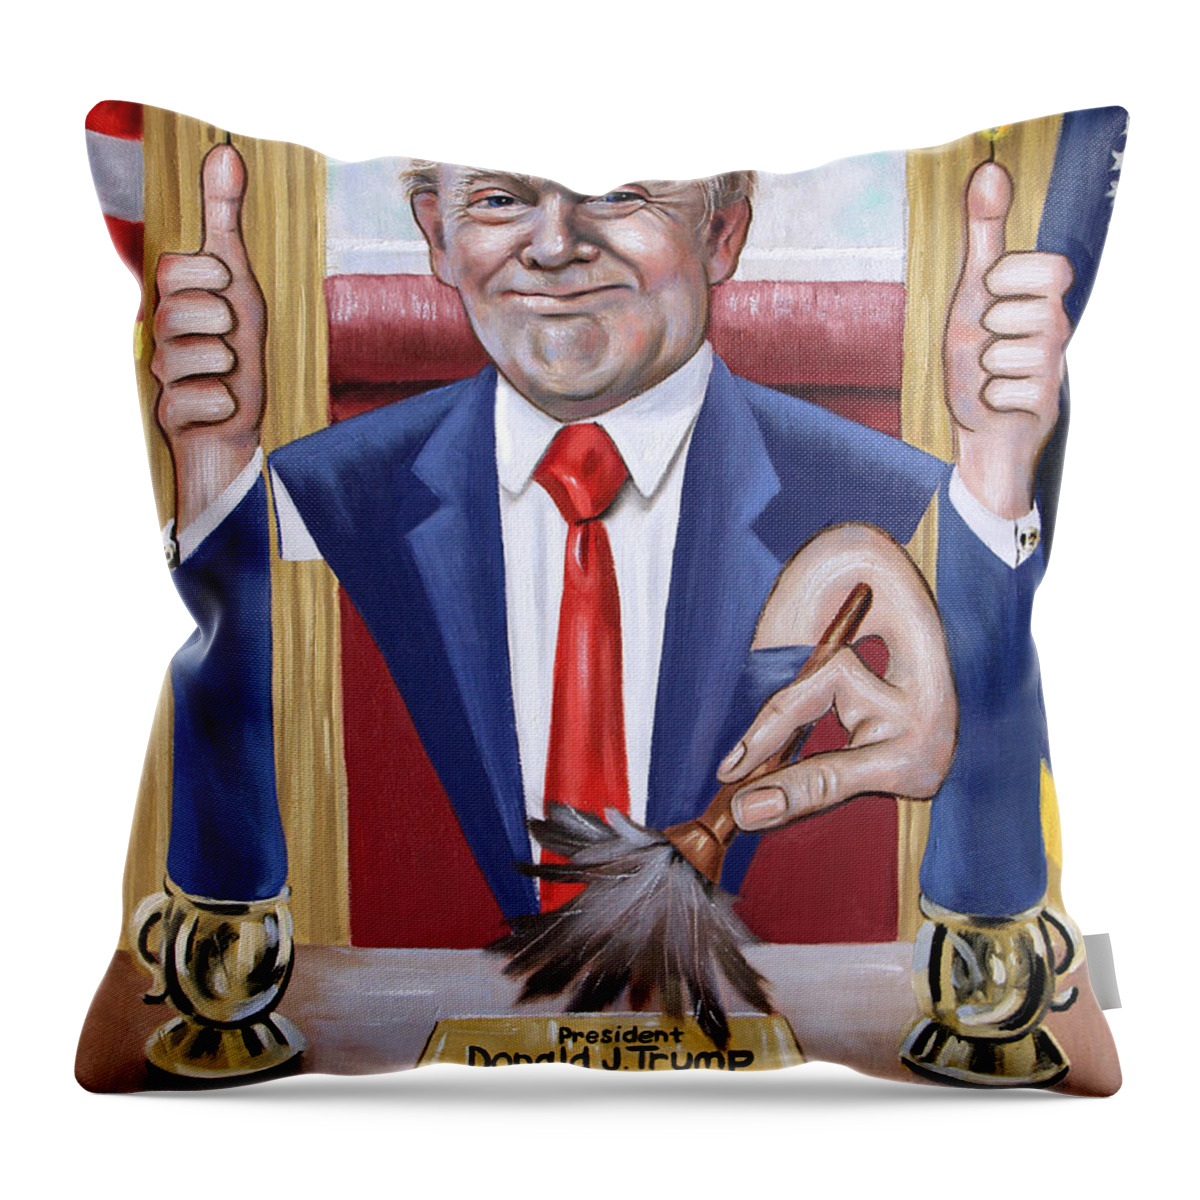 President Donald J Trump Throw Pillow featuring the painting President Donald J Trump, Not Politically Correct by Anthony Falbo